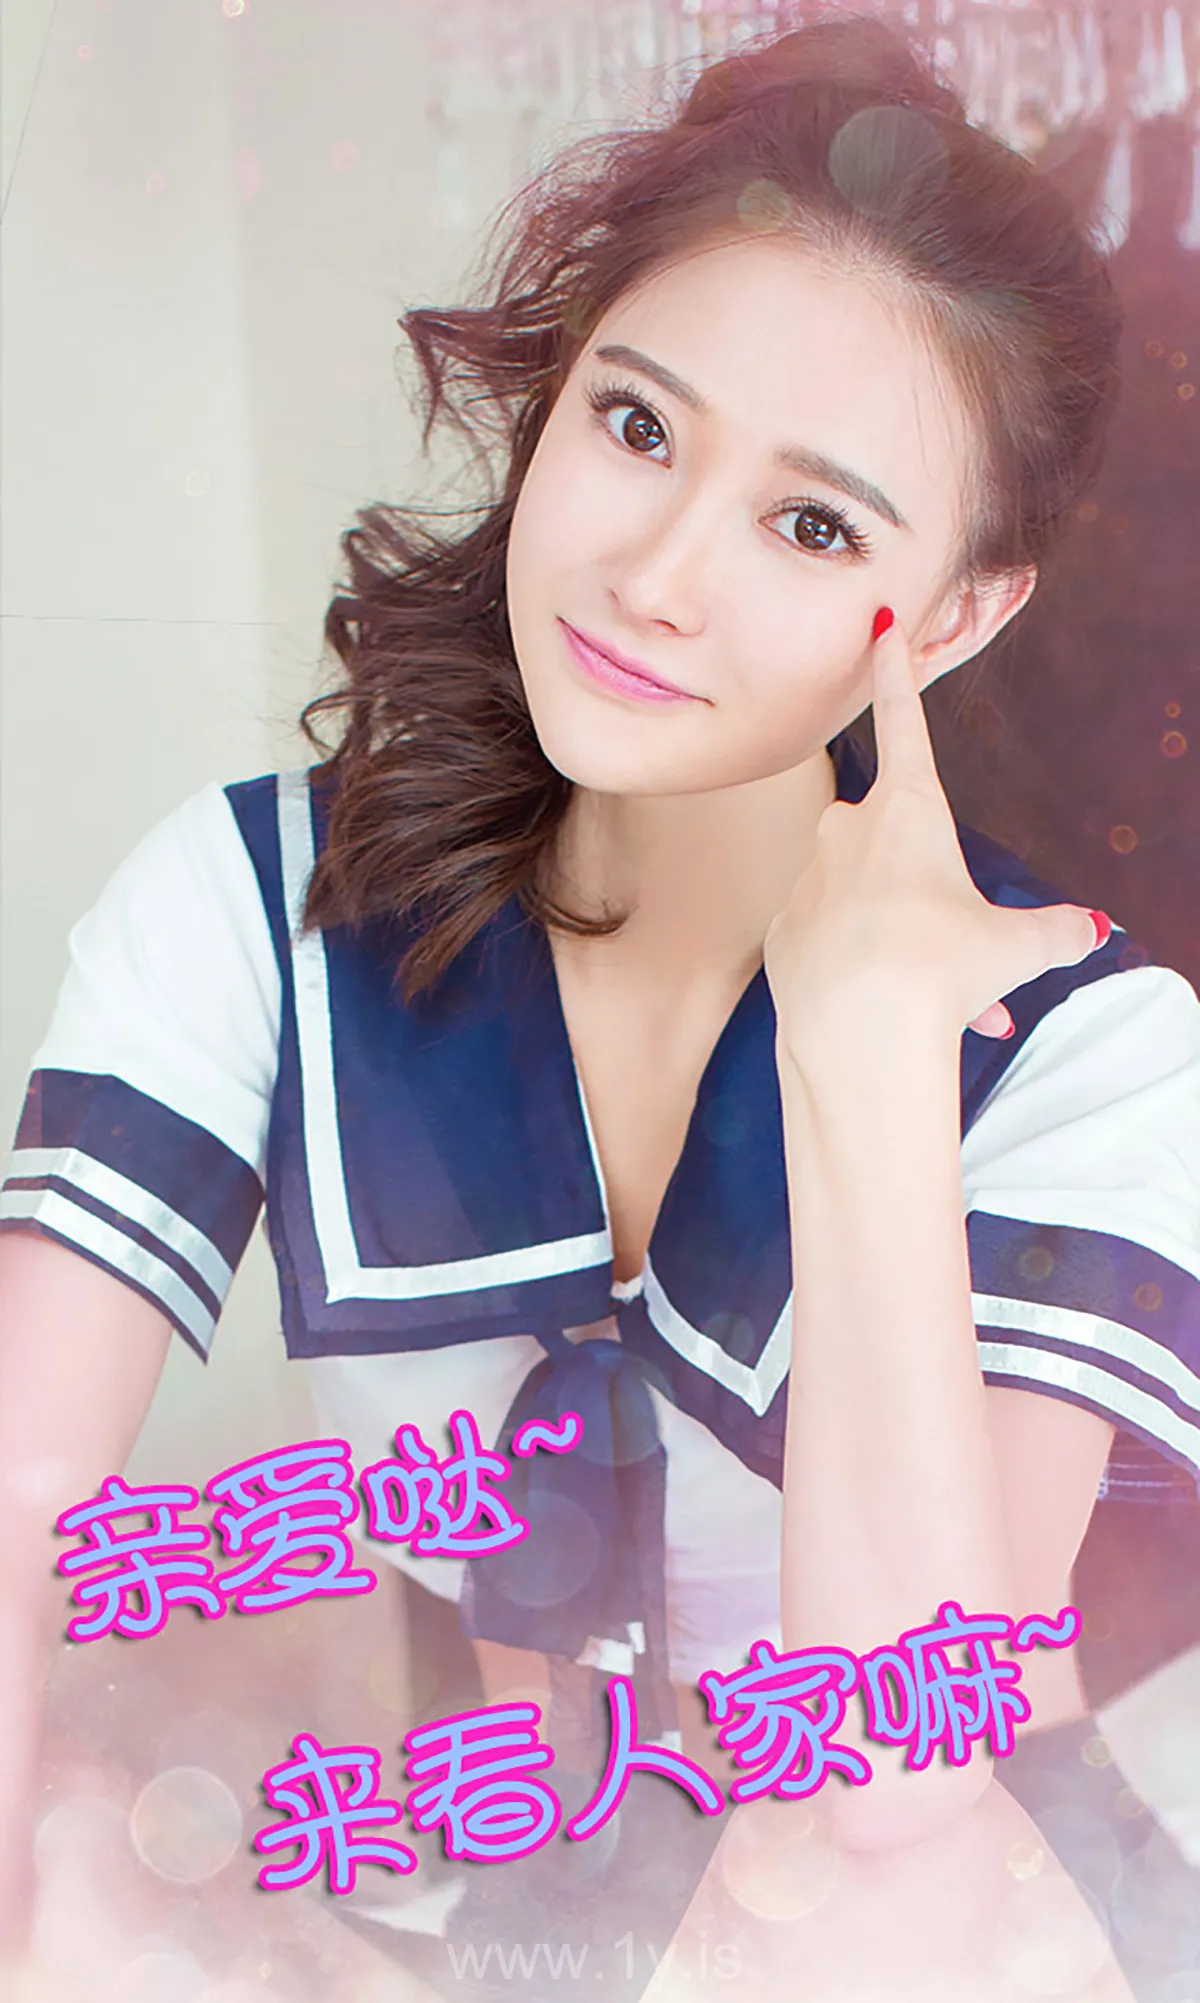 UGIRLS NO.151 Good-looking & Elegant Chinese Mature Princess 潇潇